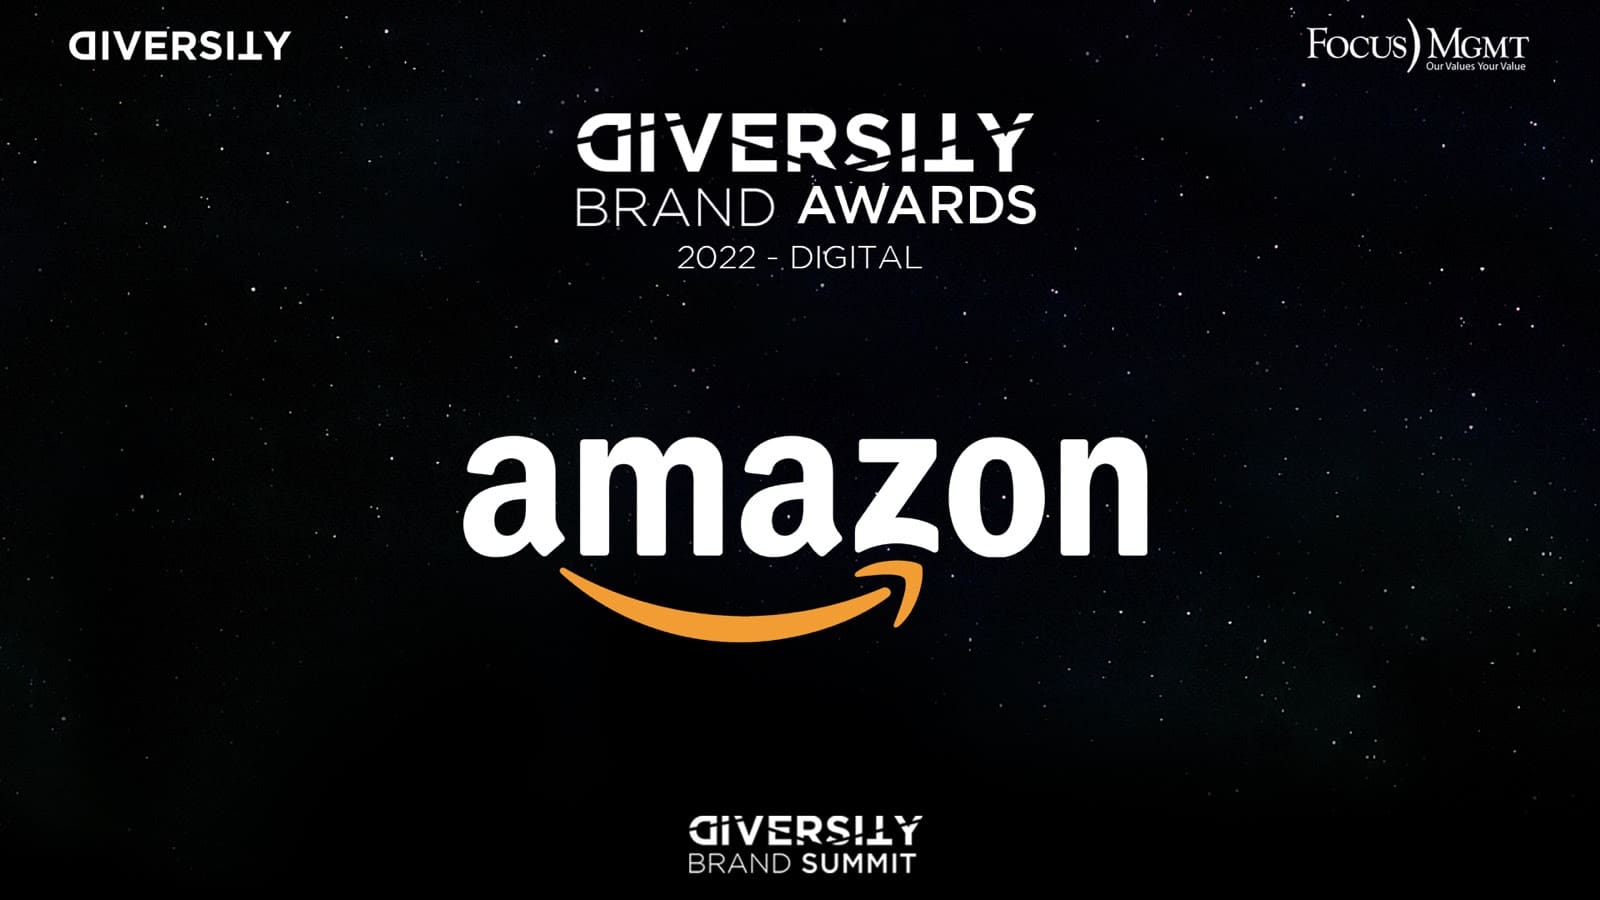 Amazon vince il Digital Diversity Brand Award al Diversity Brand Summit 2022 thumbnail